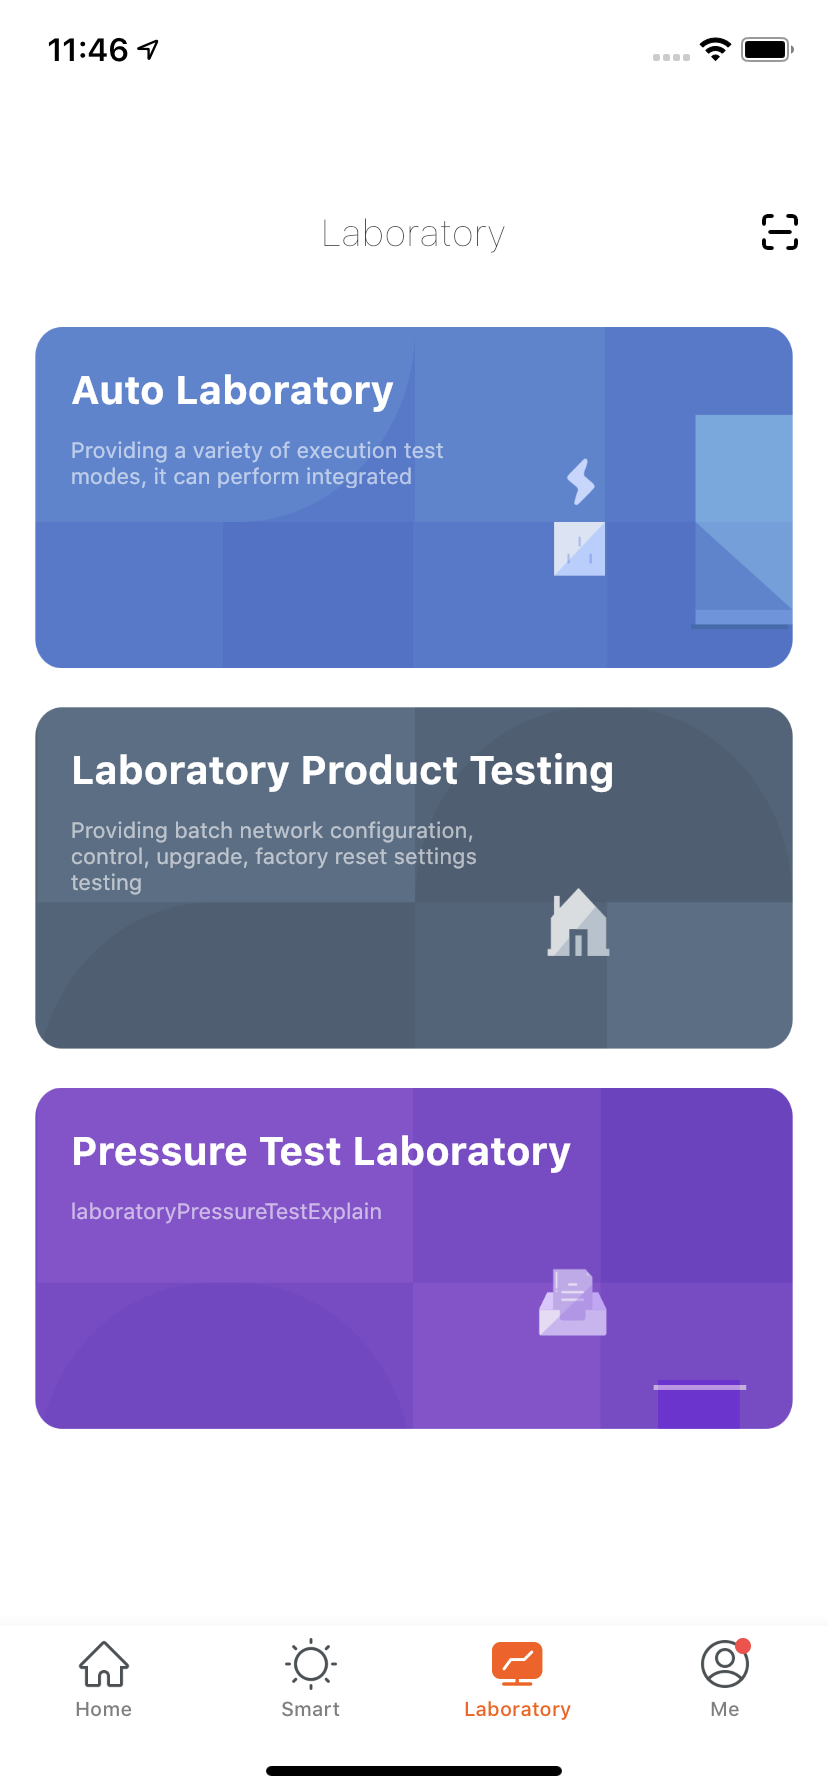 Pressure Test Laboratory